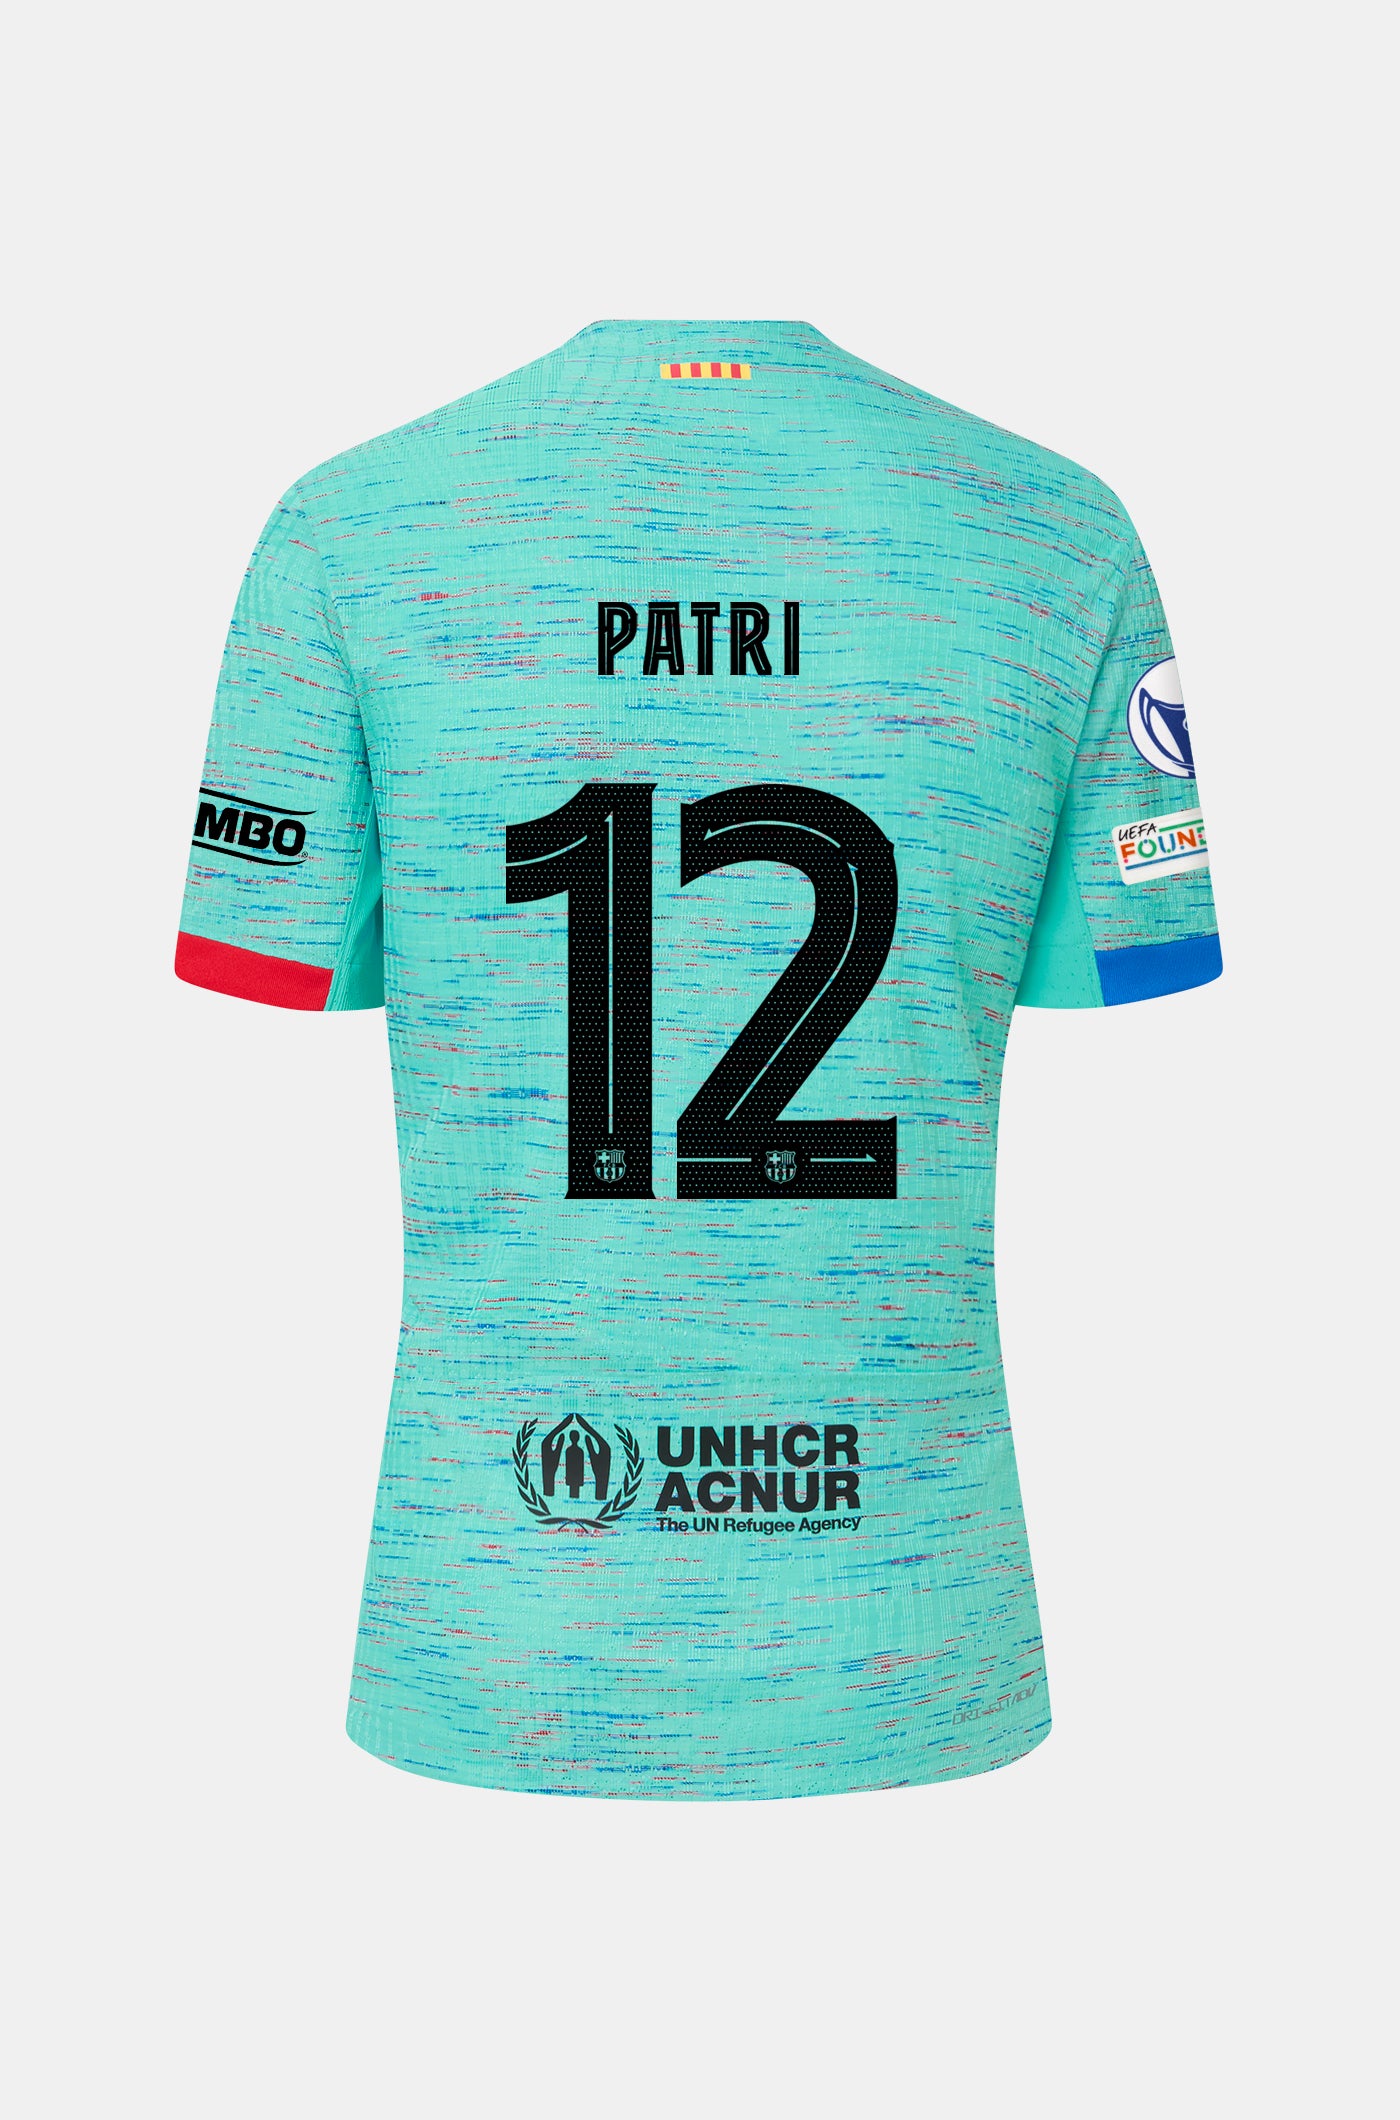 UWCL FC Barcelona third shirt 23/24 - Women  - PATRI